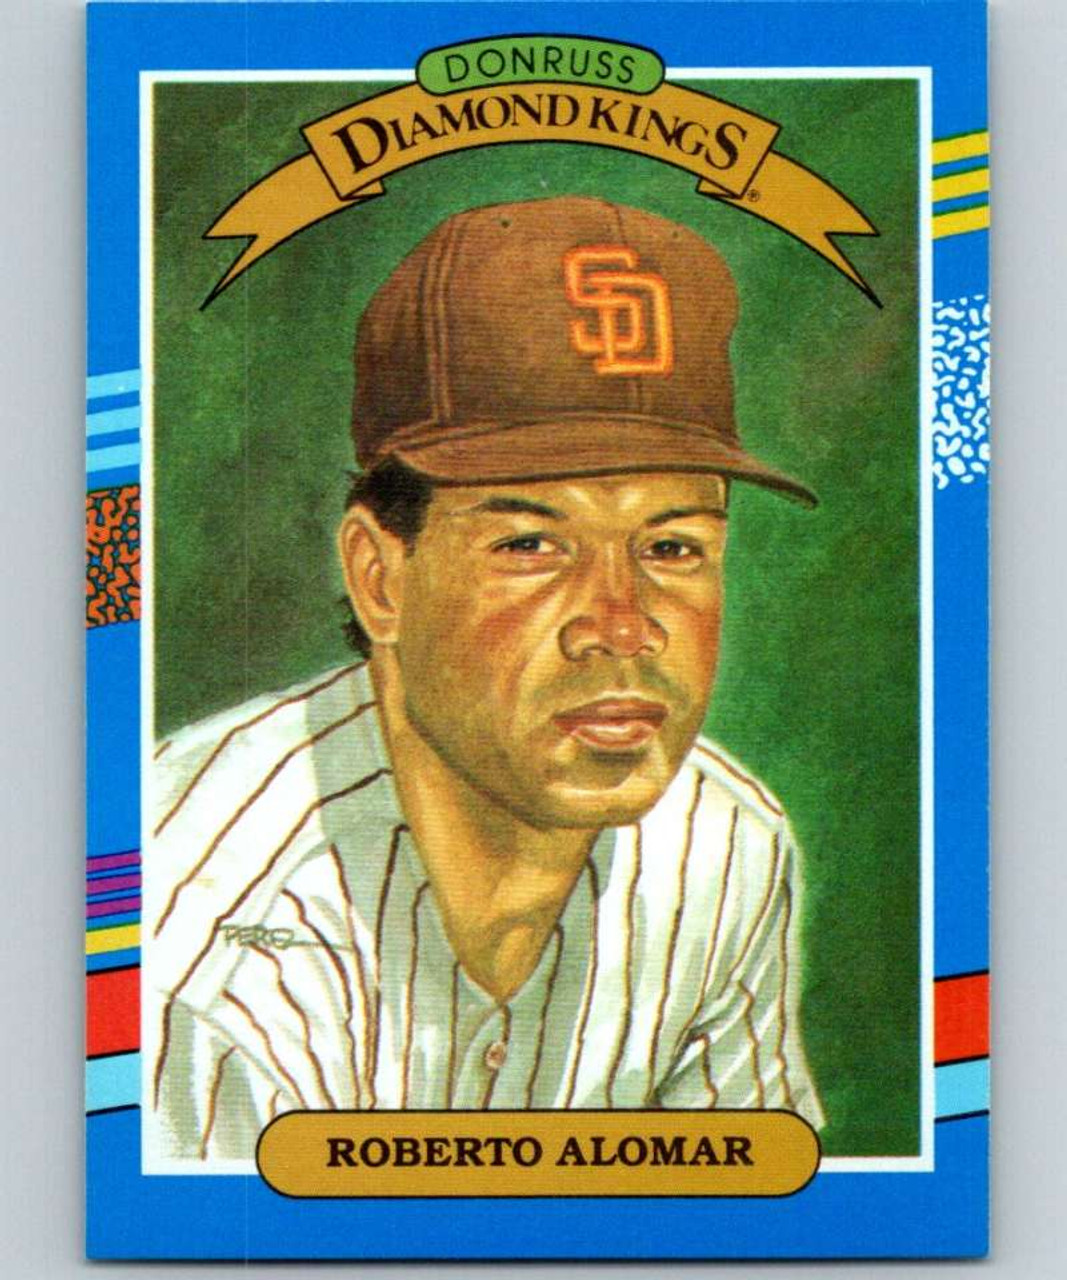  1991 Donruss Baseball Card #12 Roberto Alomar